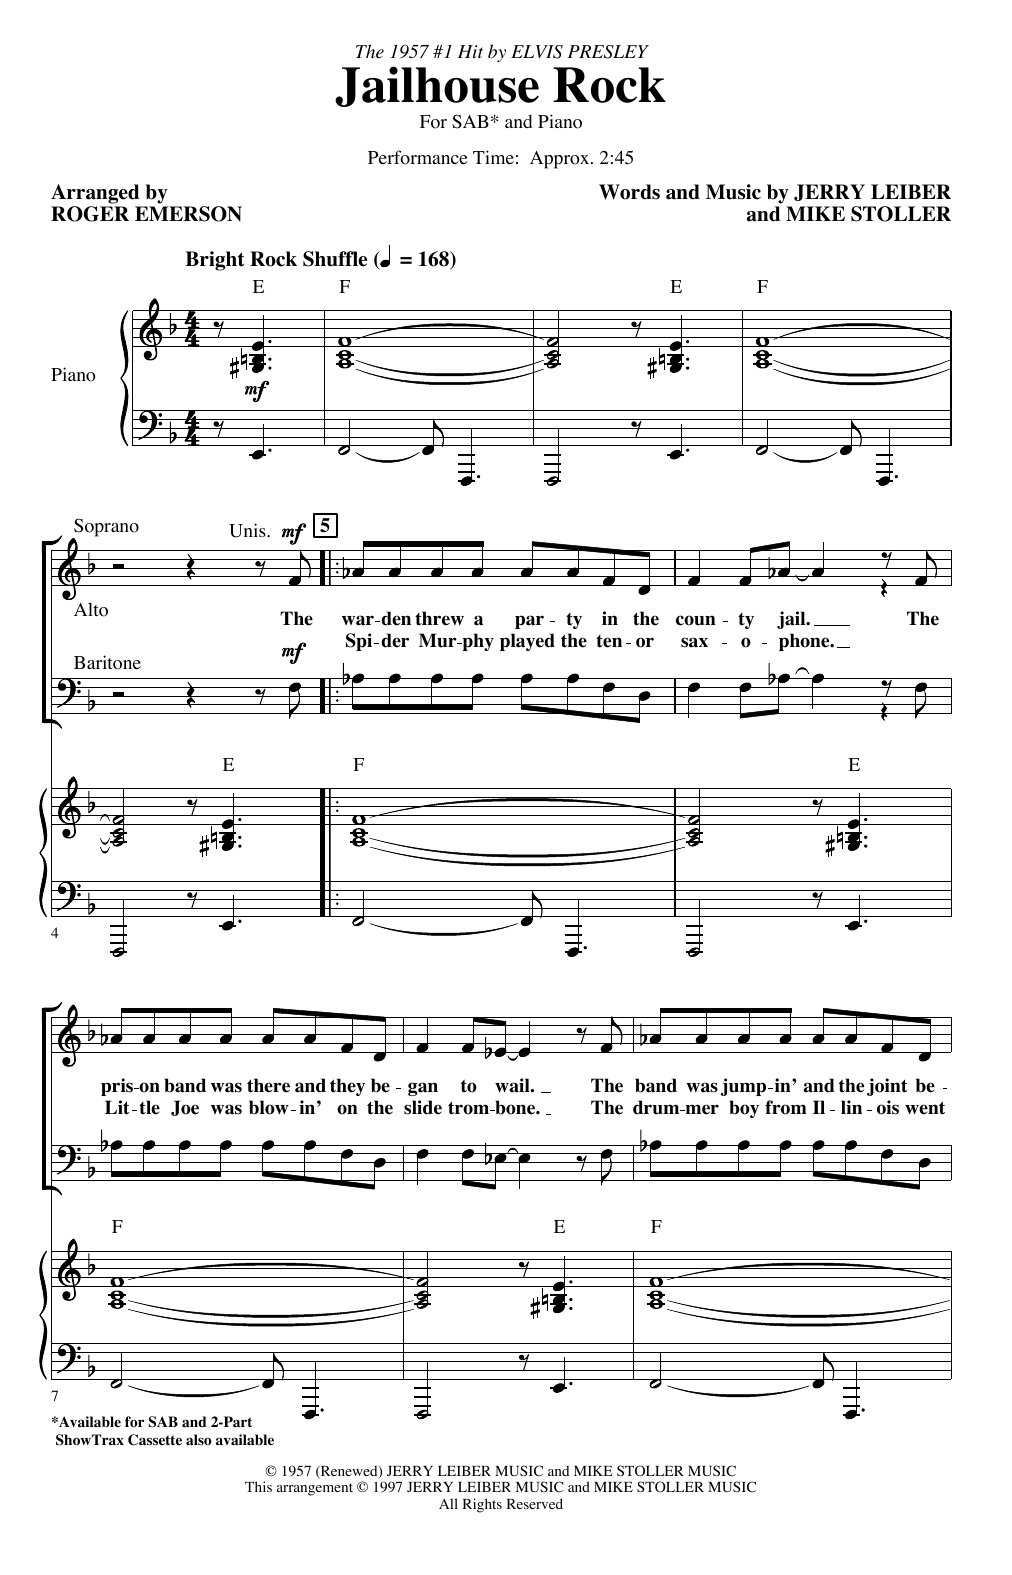 Elvis Presley Jailhouse Rock (arr. Roger Emerson) Sheet Music Notes & Chords for 2-Part Choir - Download or Print PDF